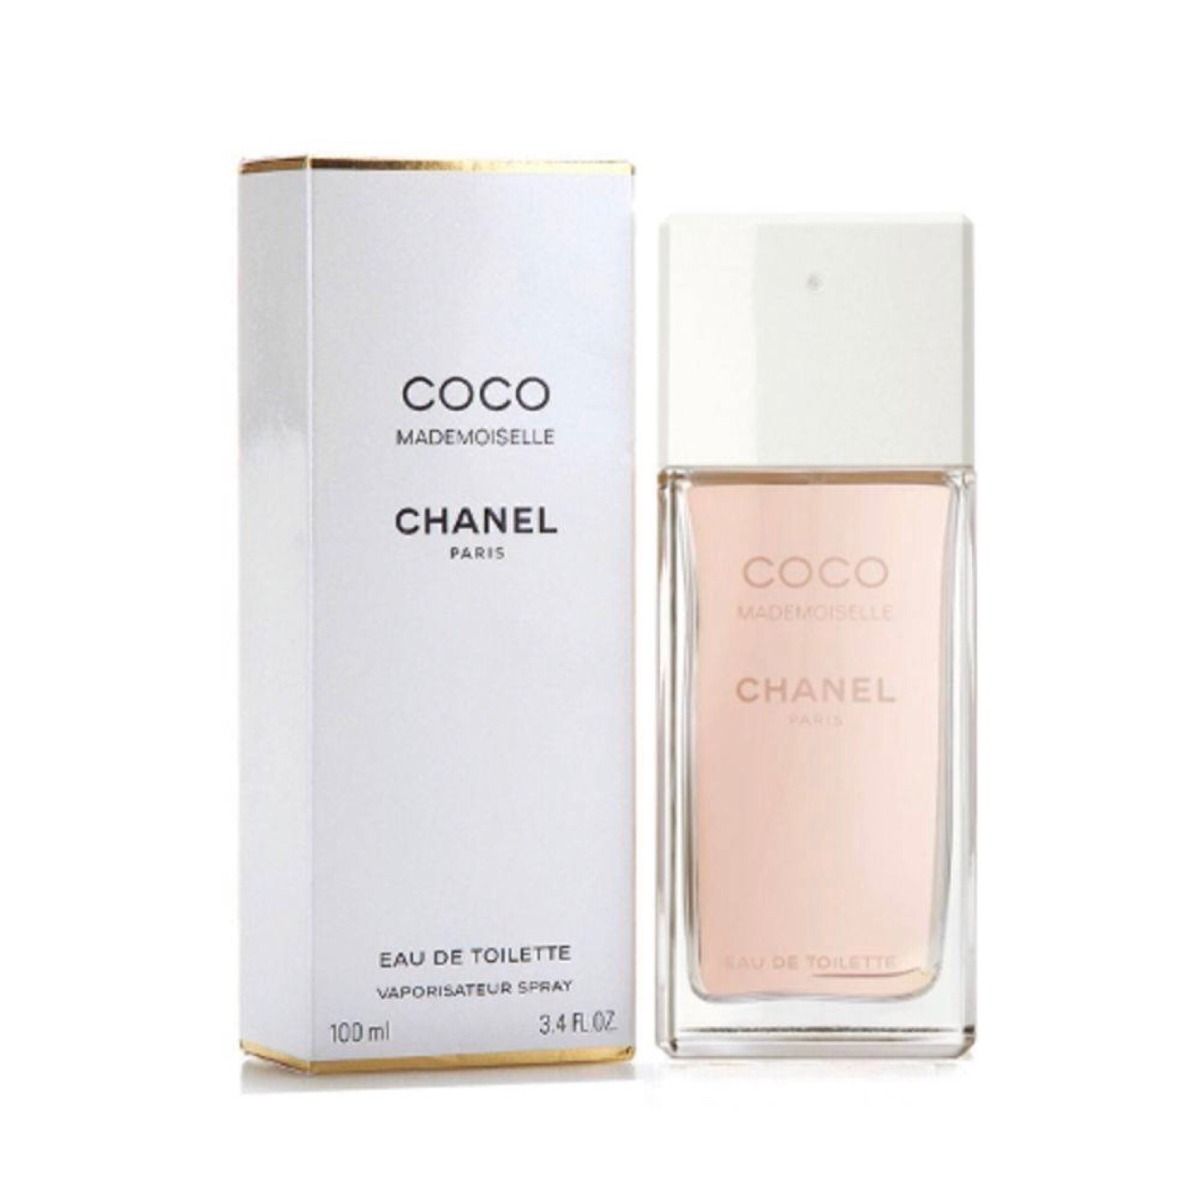 Perfume Chanel Coco Mademoiselle Eau de Toilette Feminino - Imports do vale